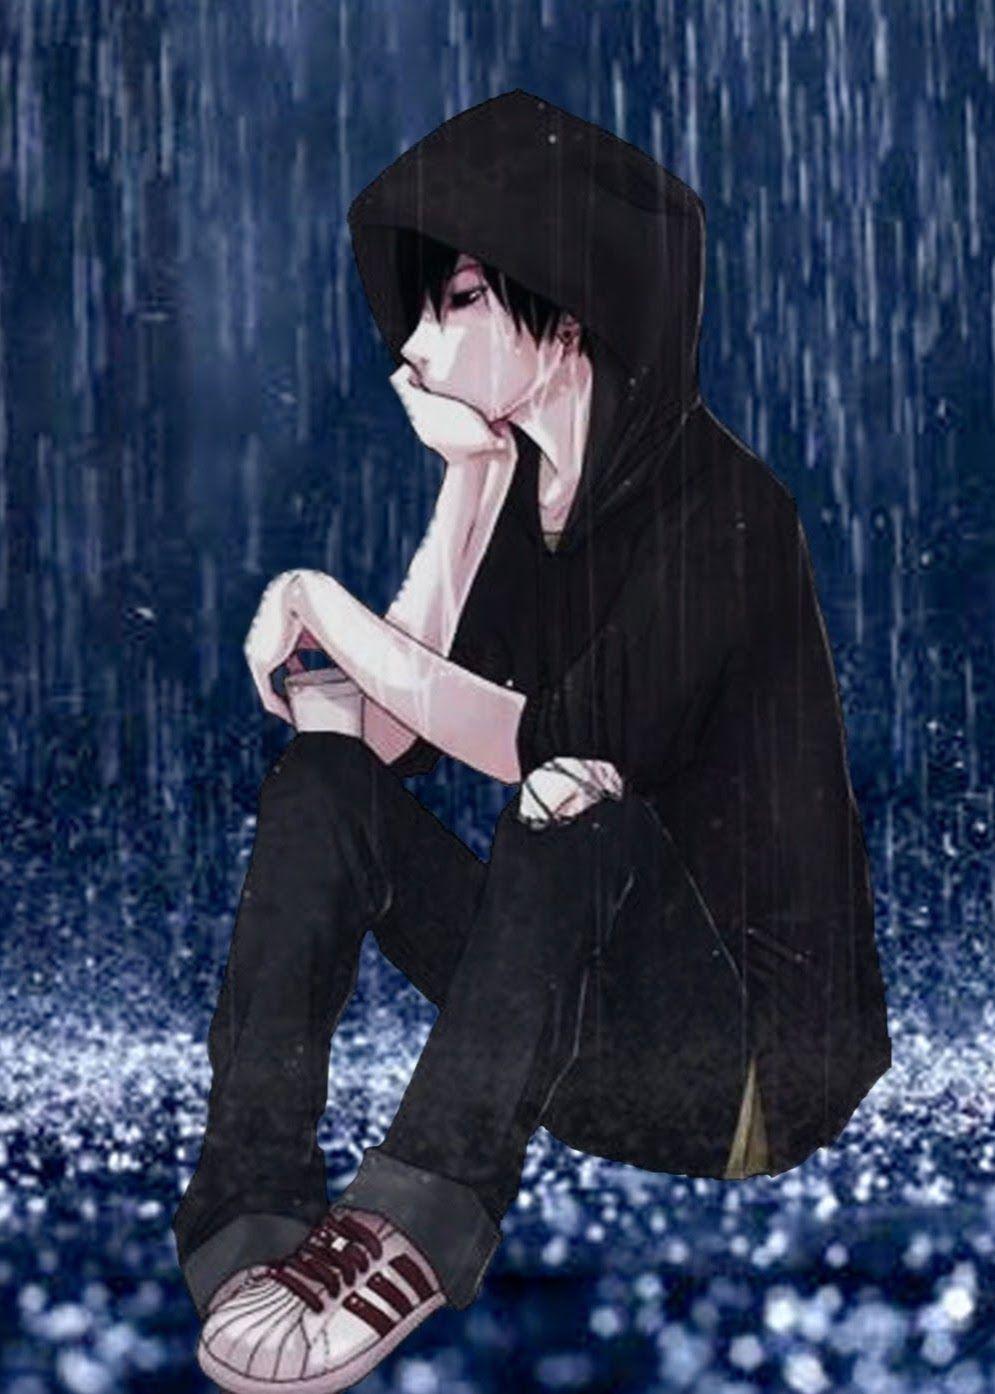 sad alone boy crying in the rain